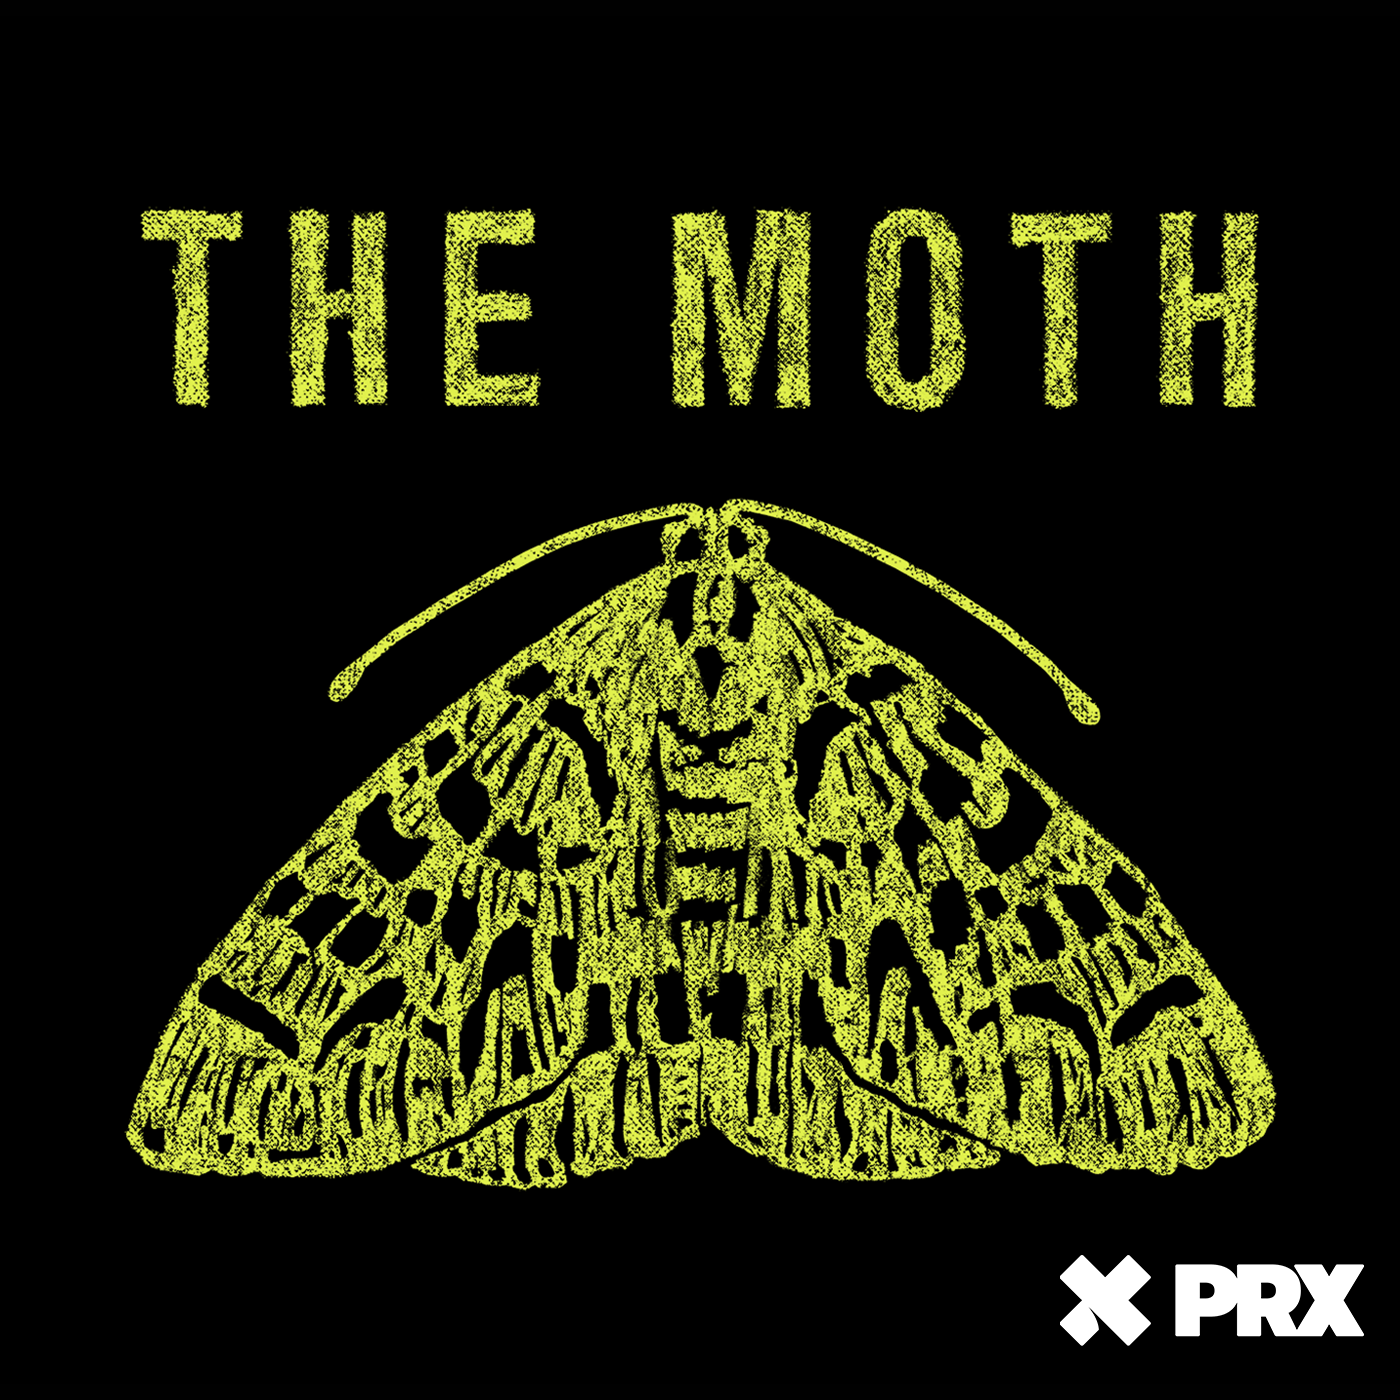 The Moth Radio Hour: Taking Risks